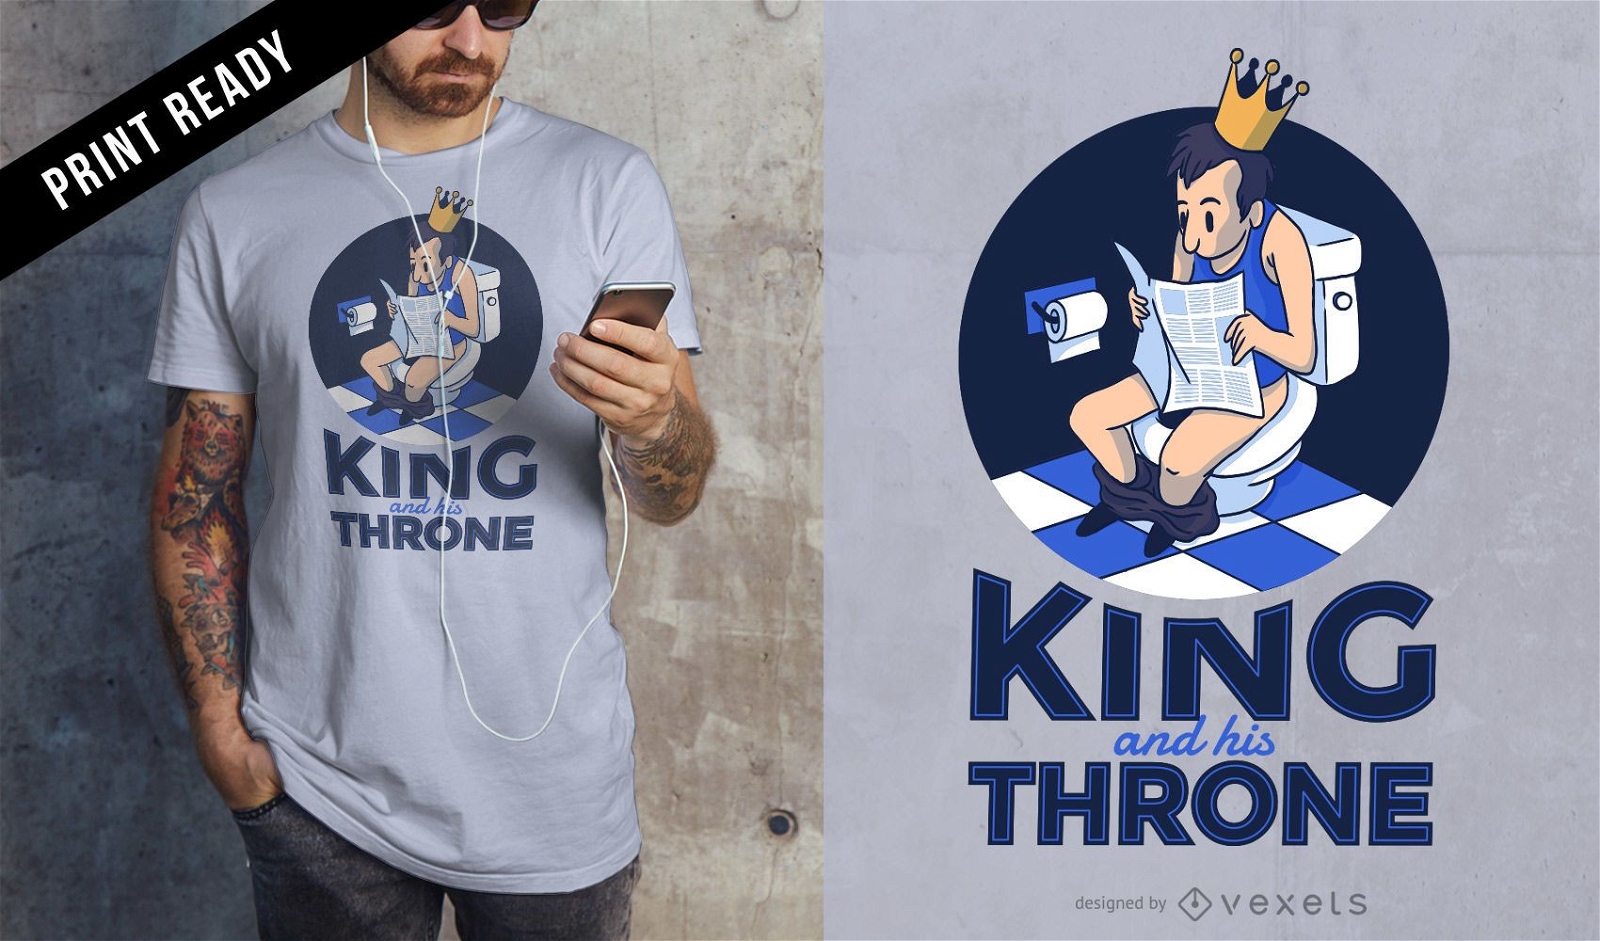 King throne t-shirt design